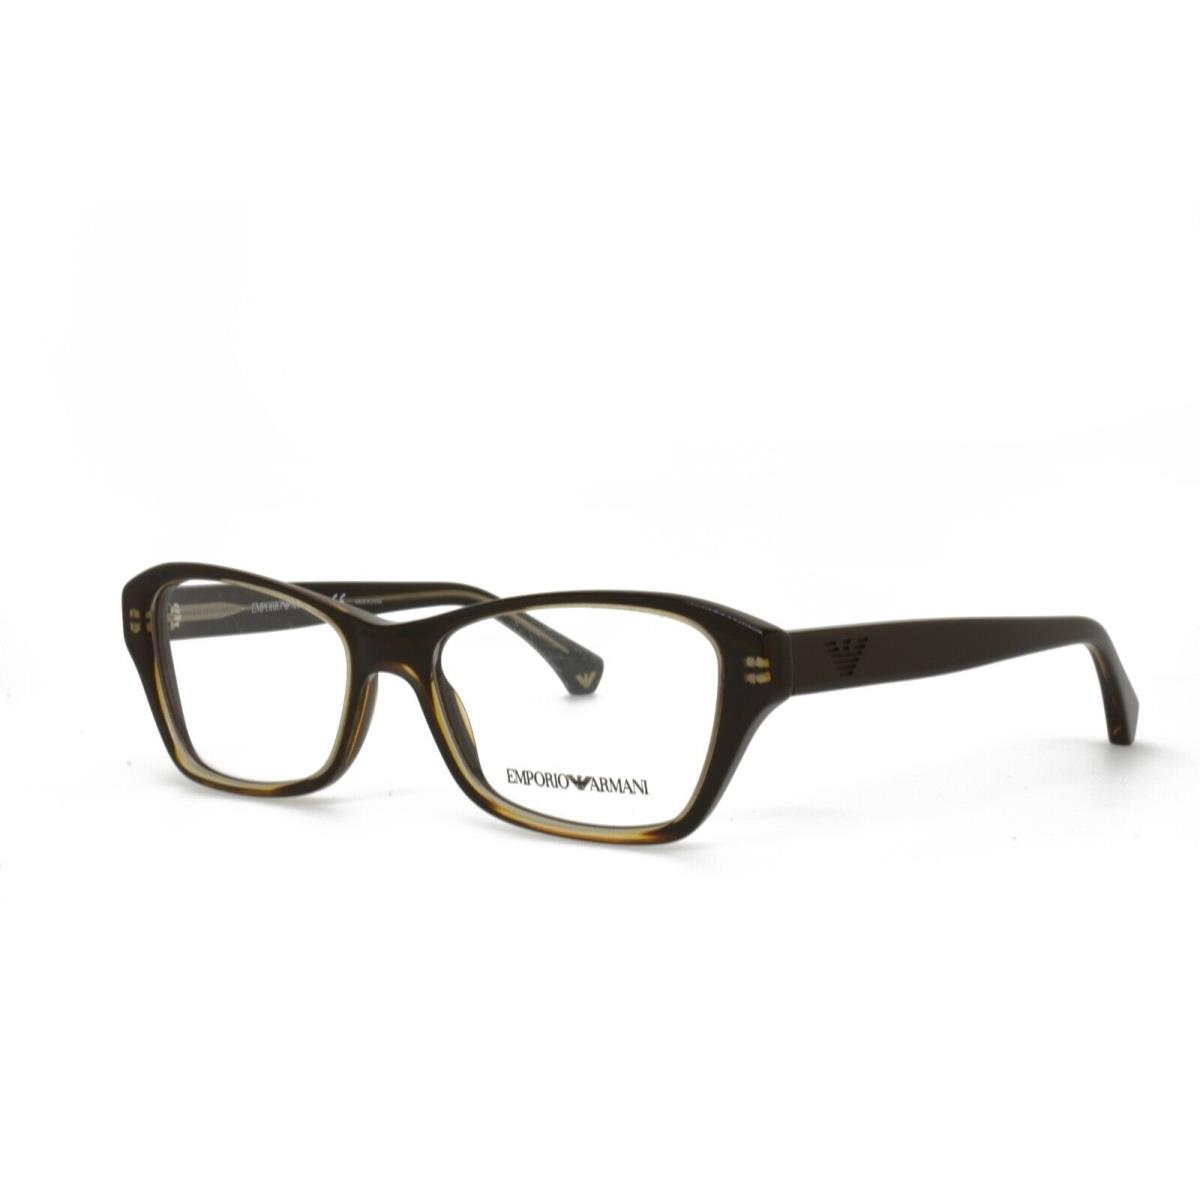 Emporio Armani 3032 5222 52-16-140 Brown Eyeglasses Frames